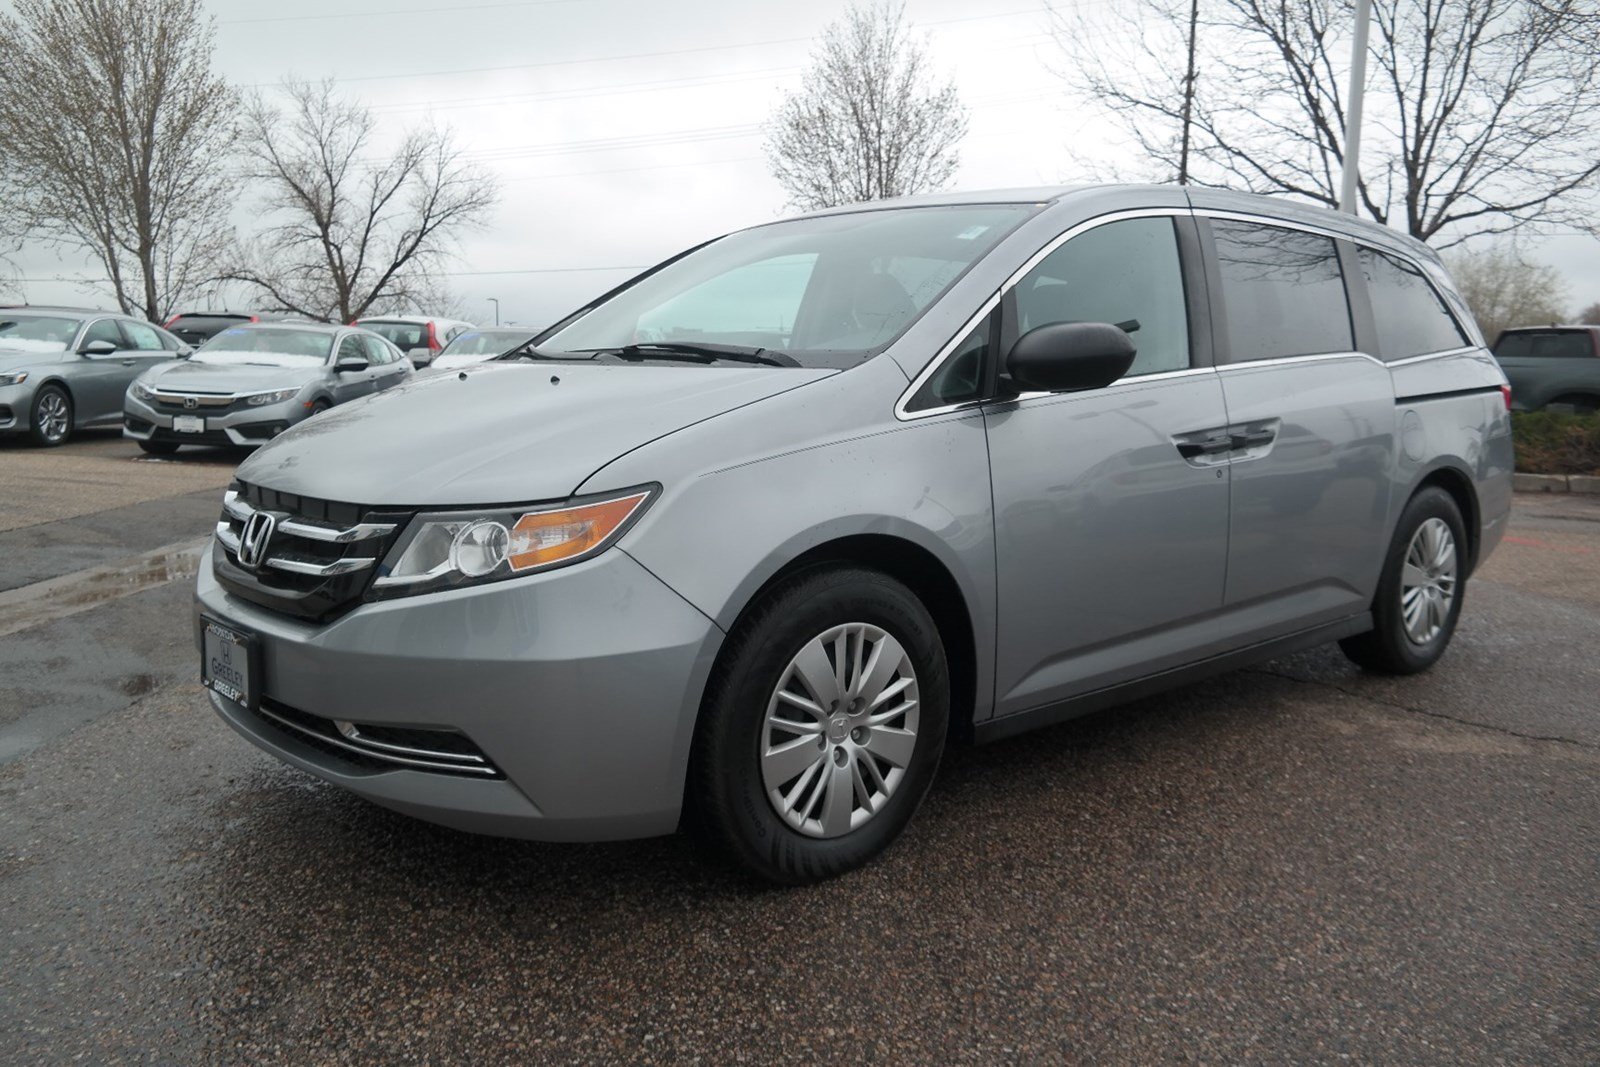 Pre-Owned-2016-Honda-Odyssey-LX-Mini-van,-Passenger-in-...